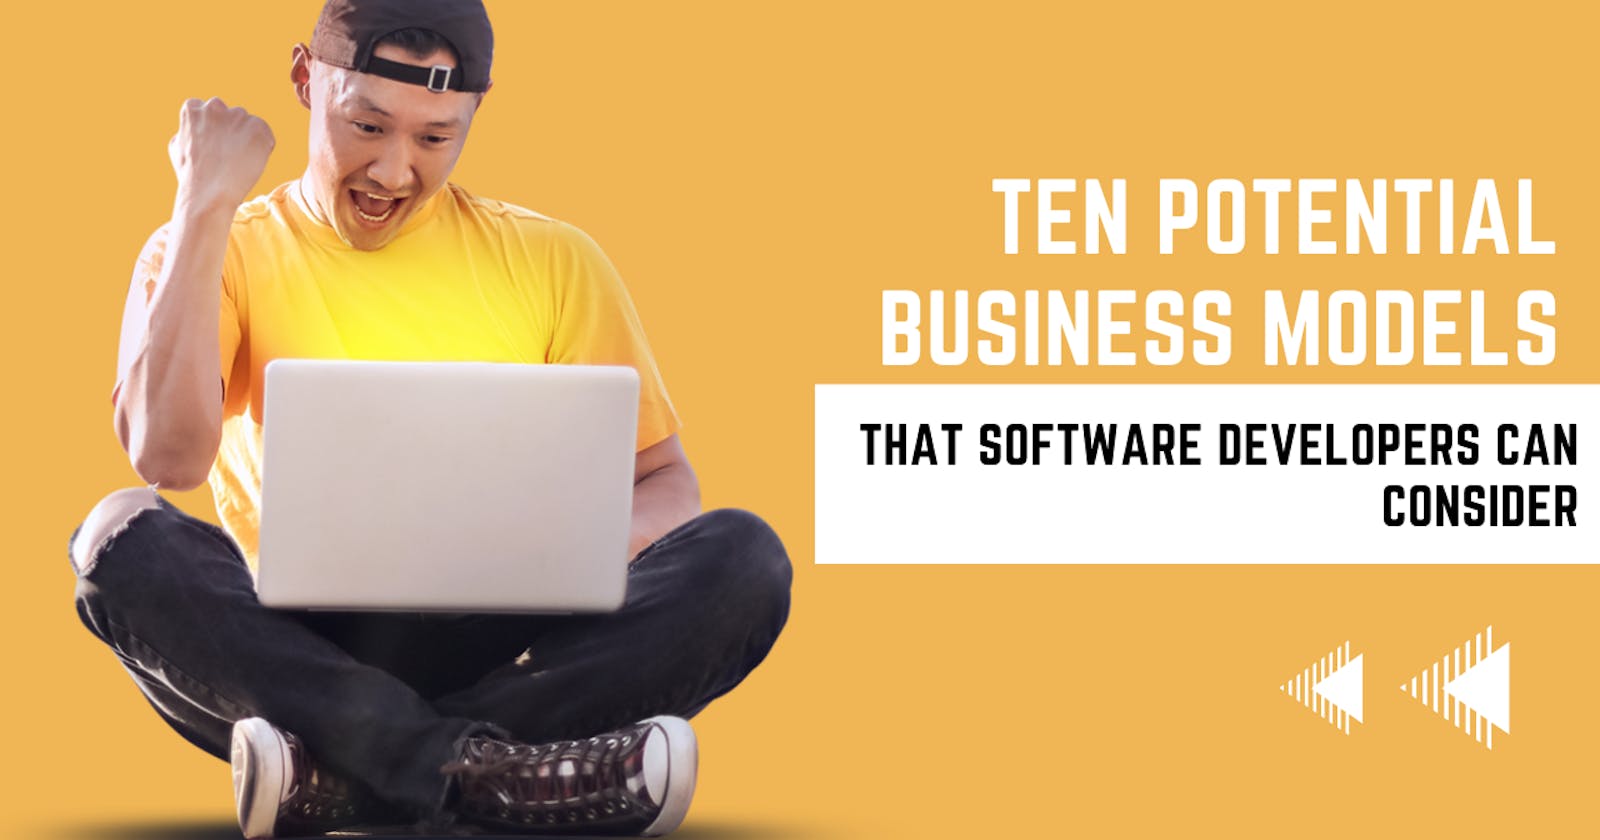 10 potential business models for software developers